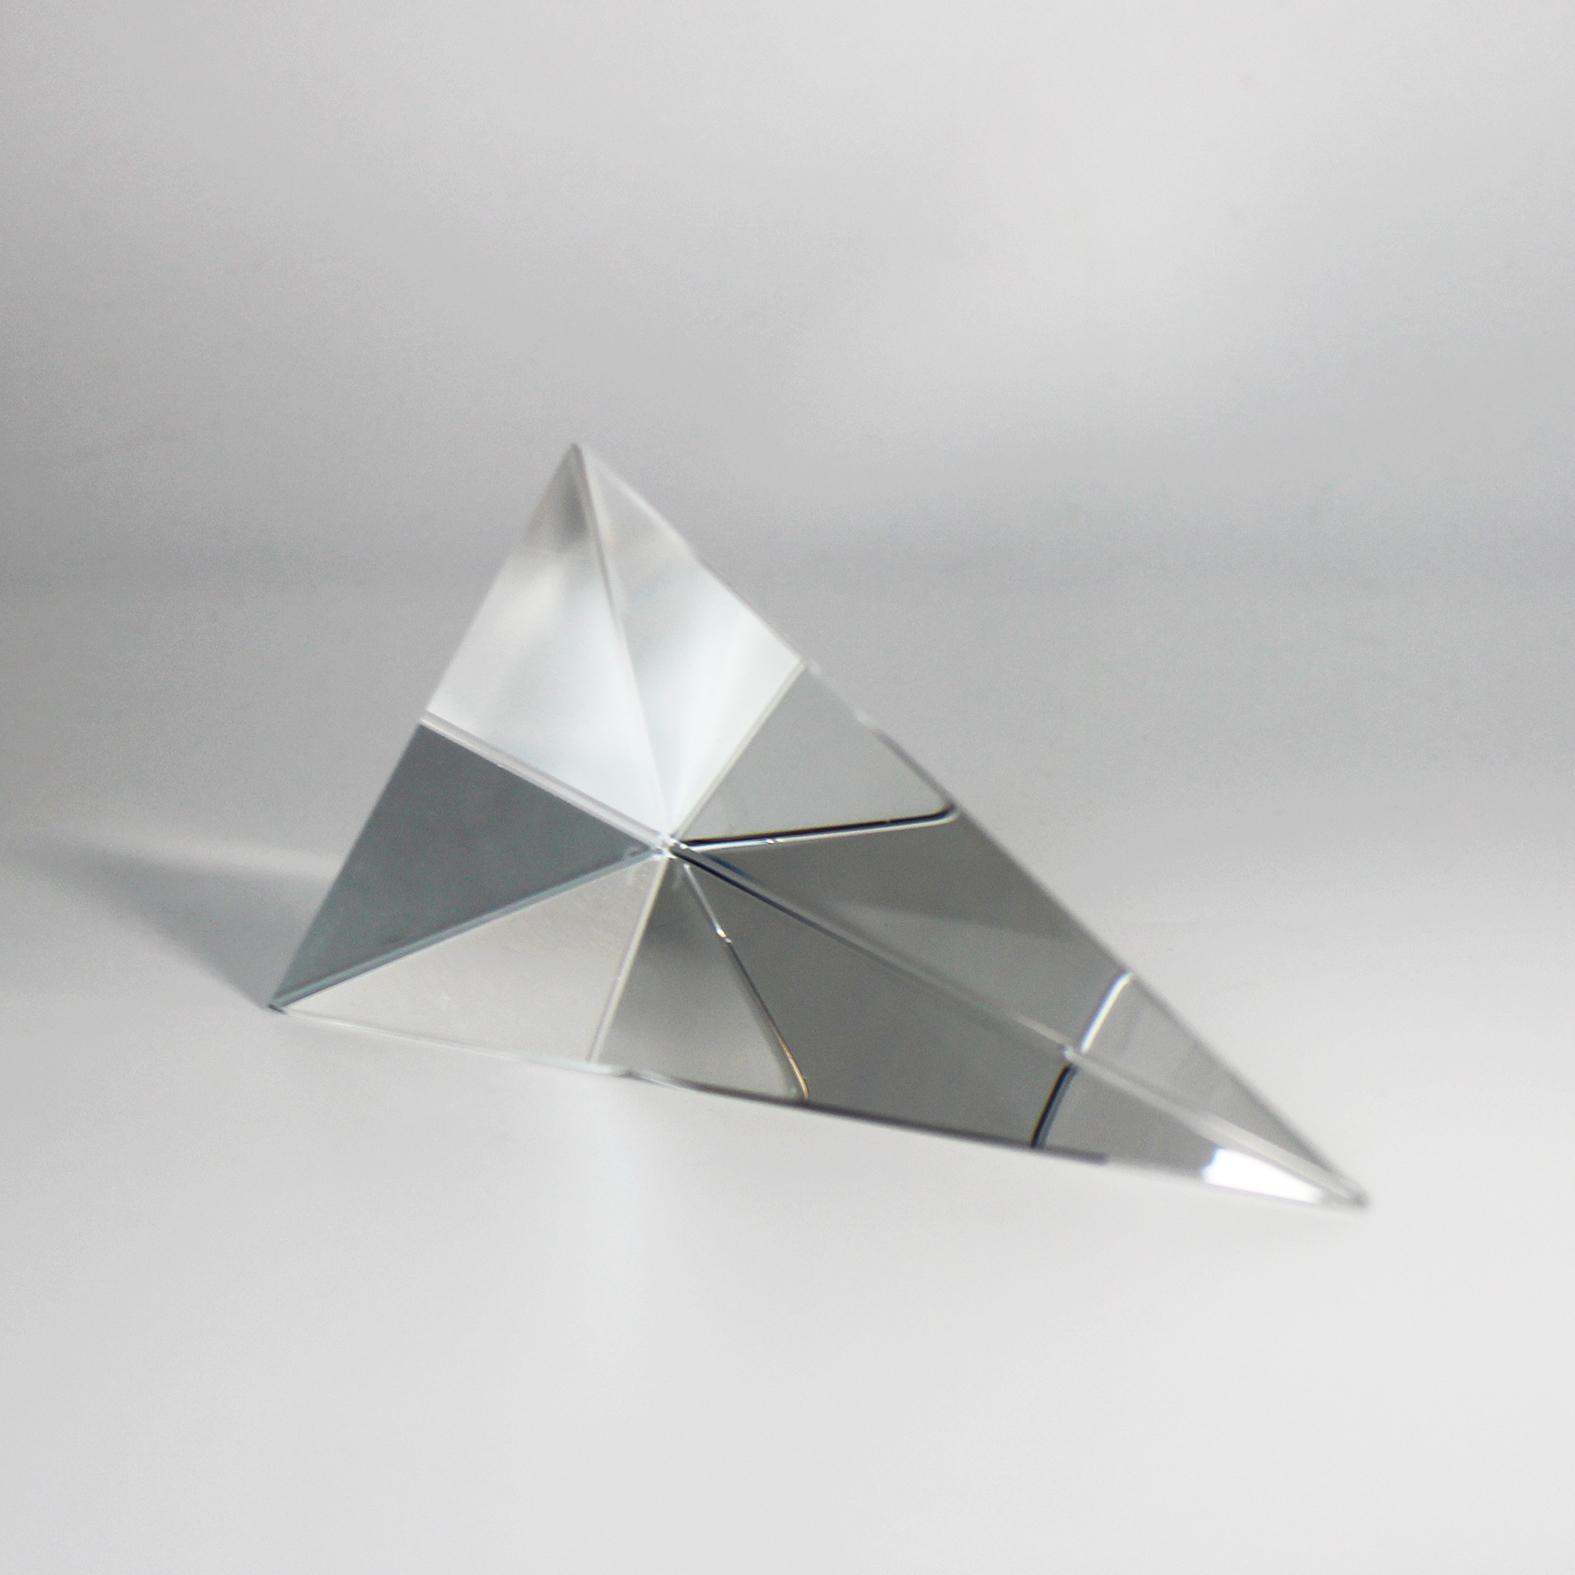 China Factory Diret Selling Optical Glass K9 Triangular Pyramid Prism